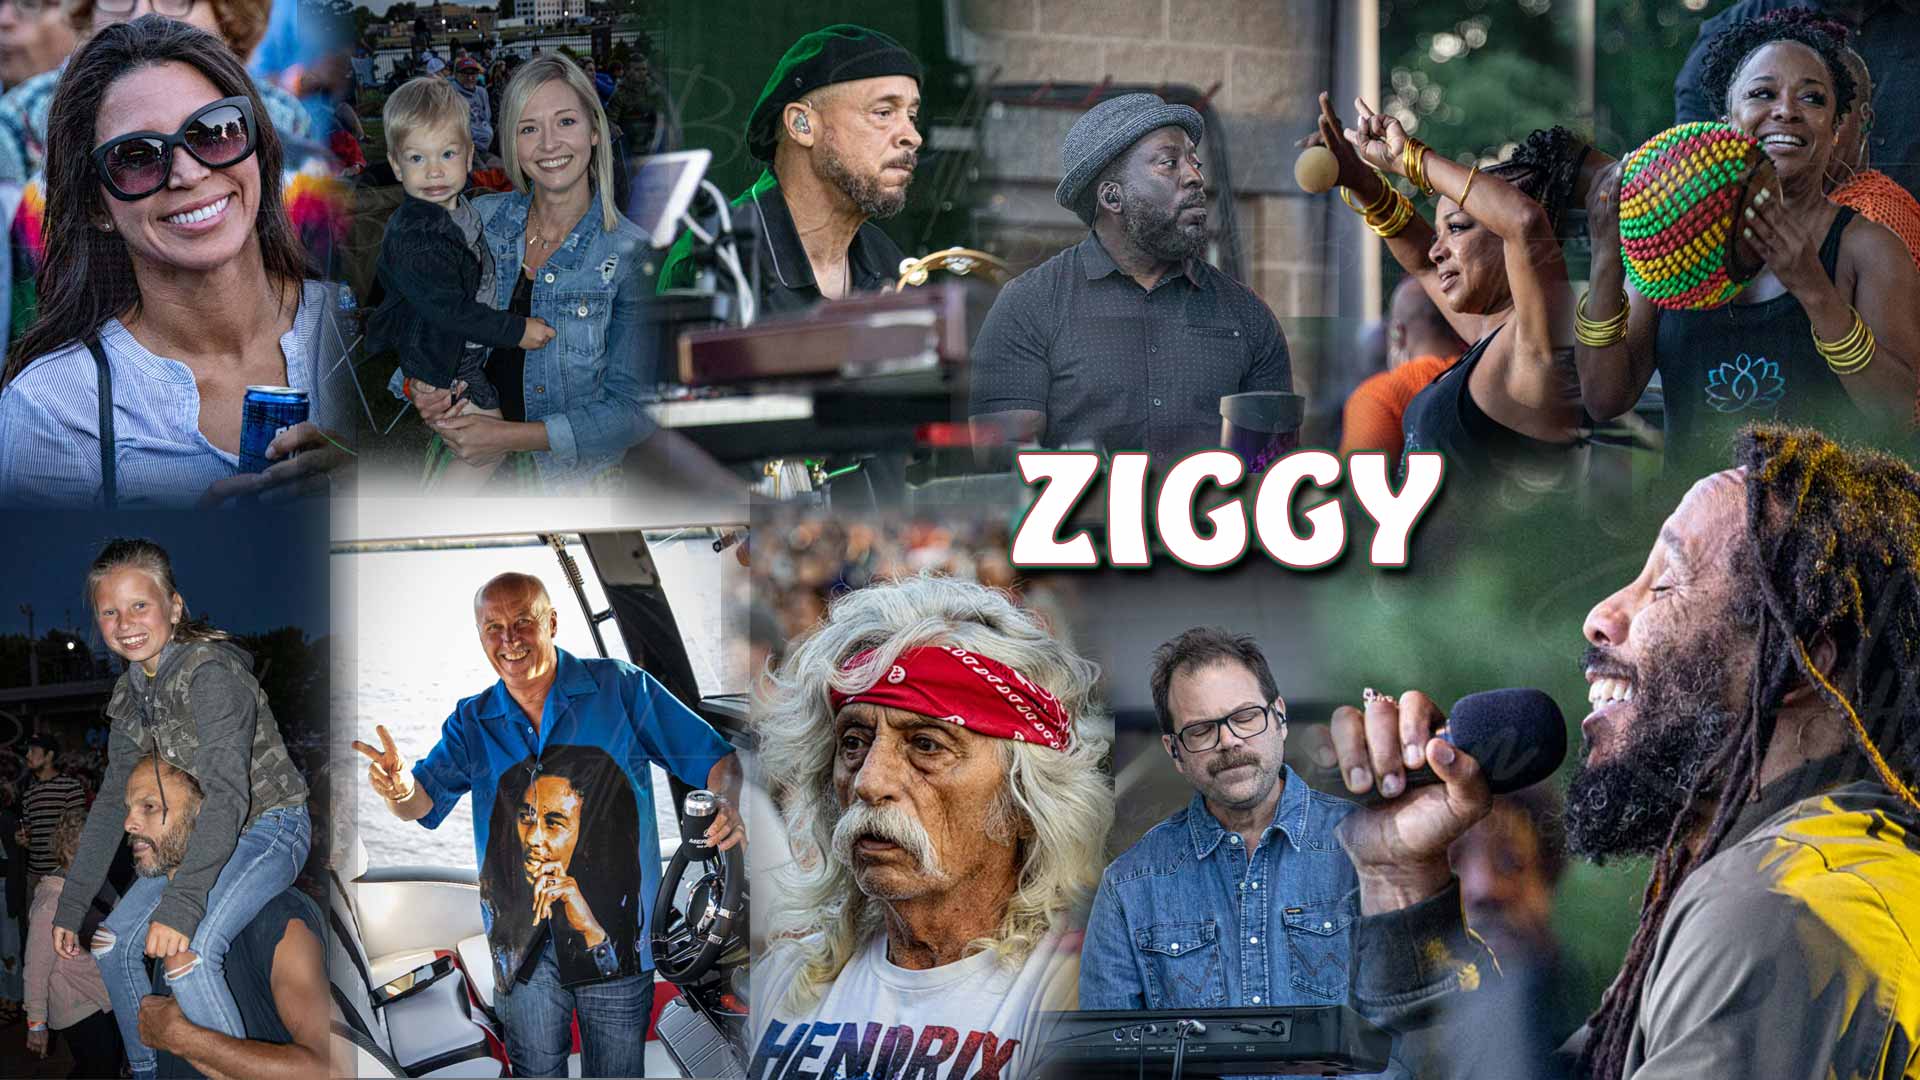 Ziggy Marley at Oshkosh Waterrfest